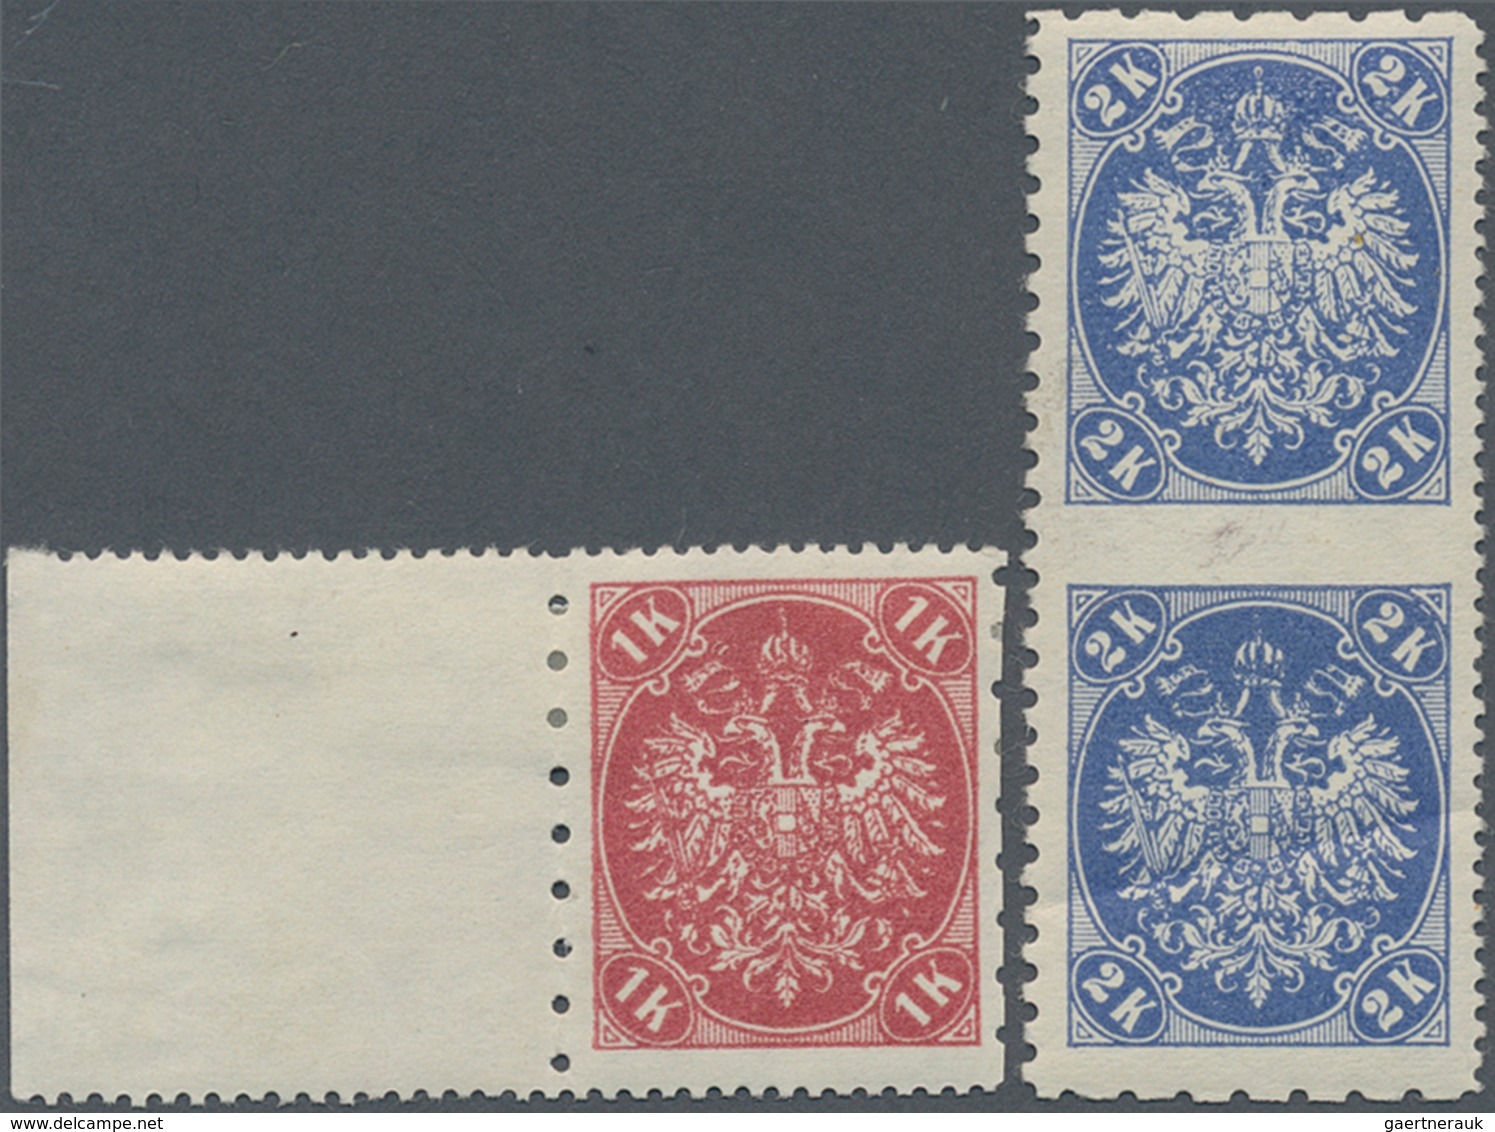 Bosnien Und Herzegowina: 1900, Definitives "Double Eagle", 1kr. Rose And 2 Kr. Ultramarine, Speciali - Bosnia And Herzegovina